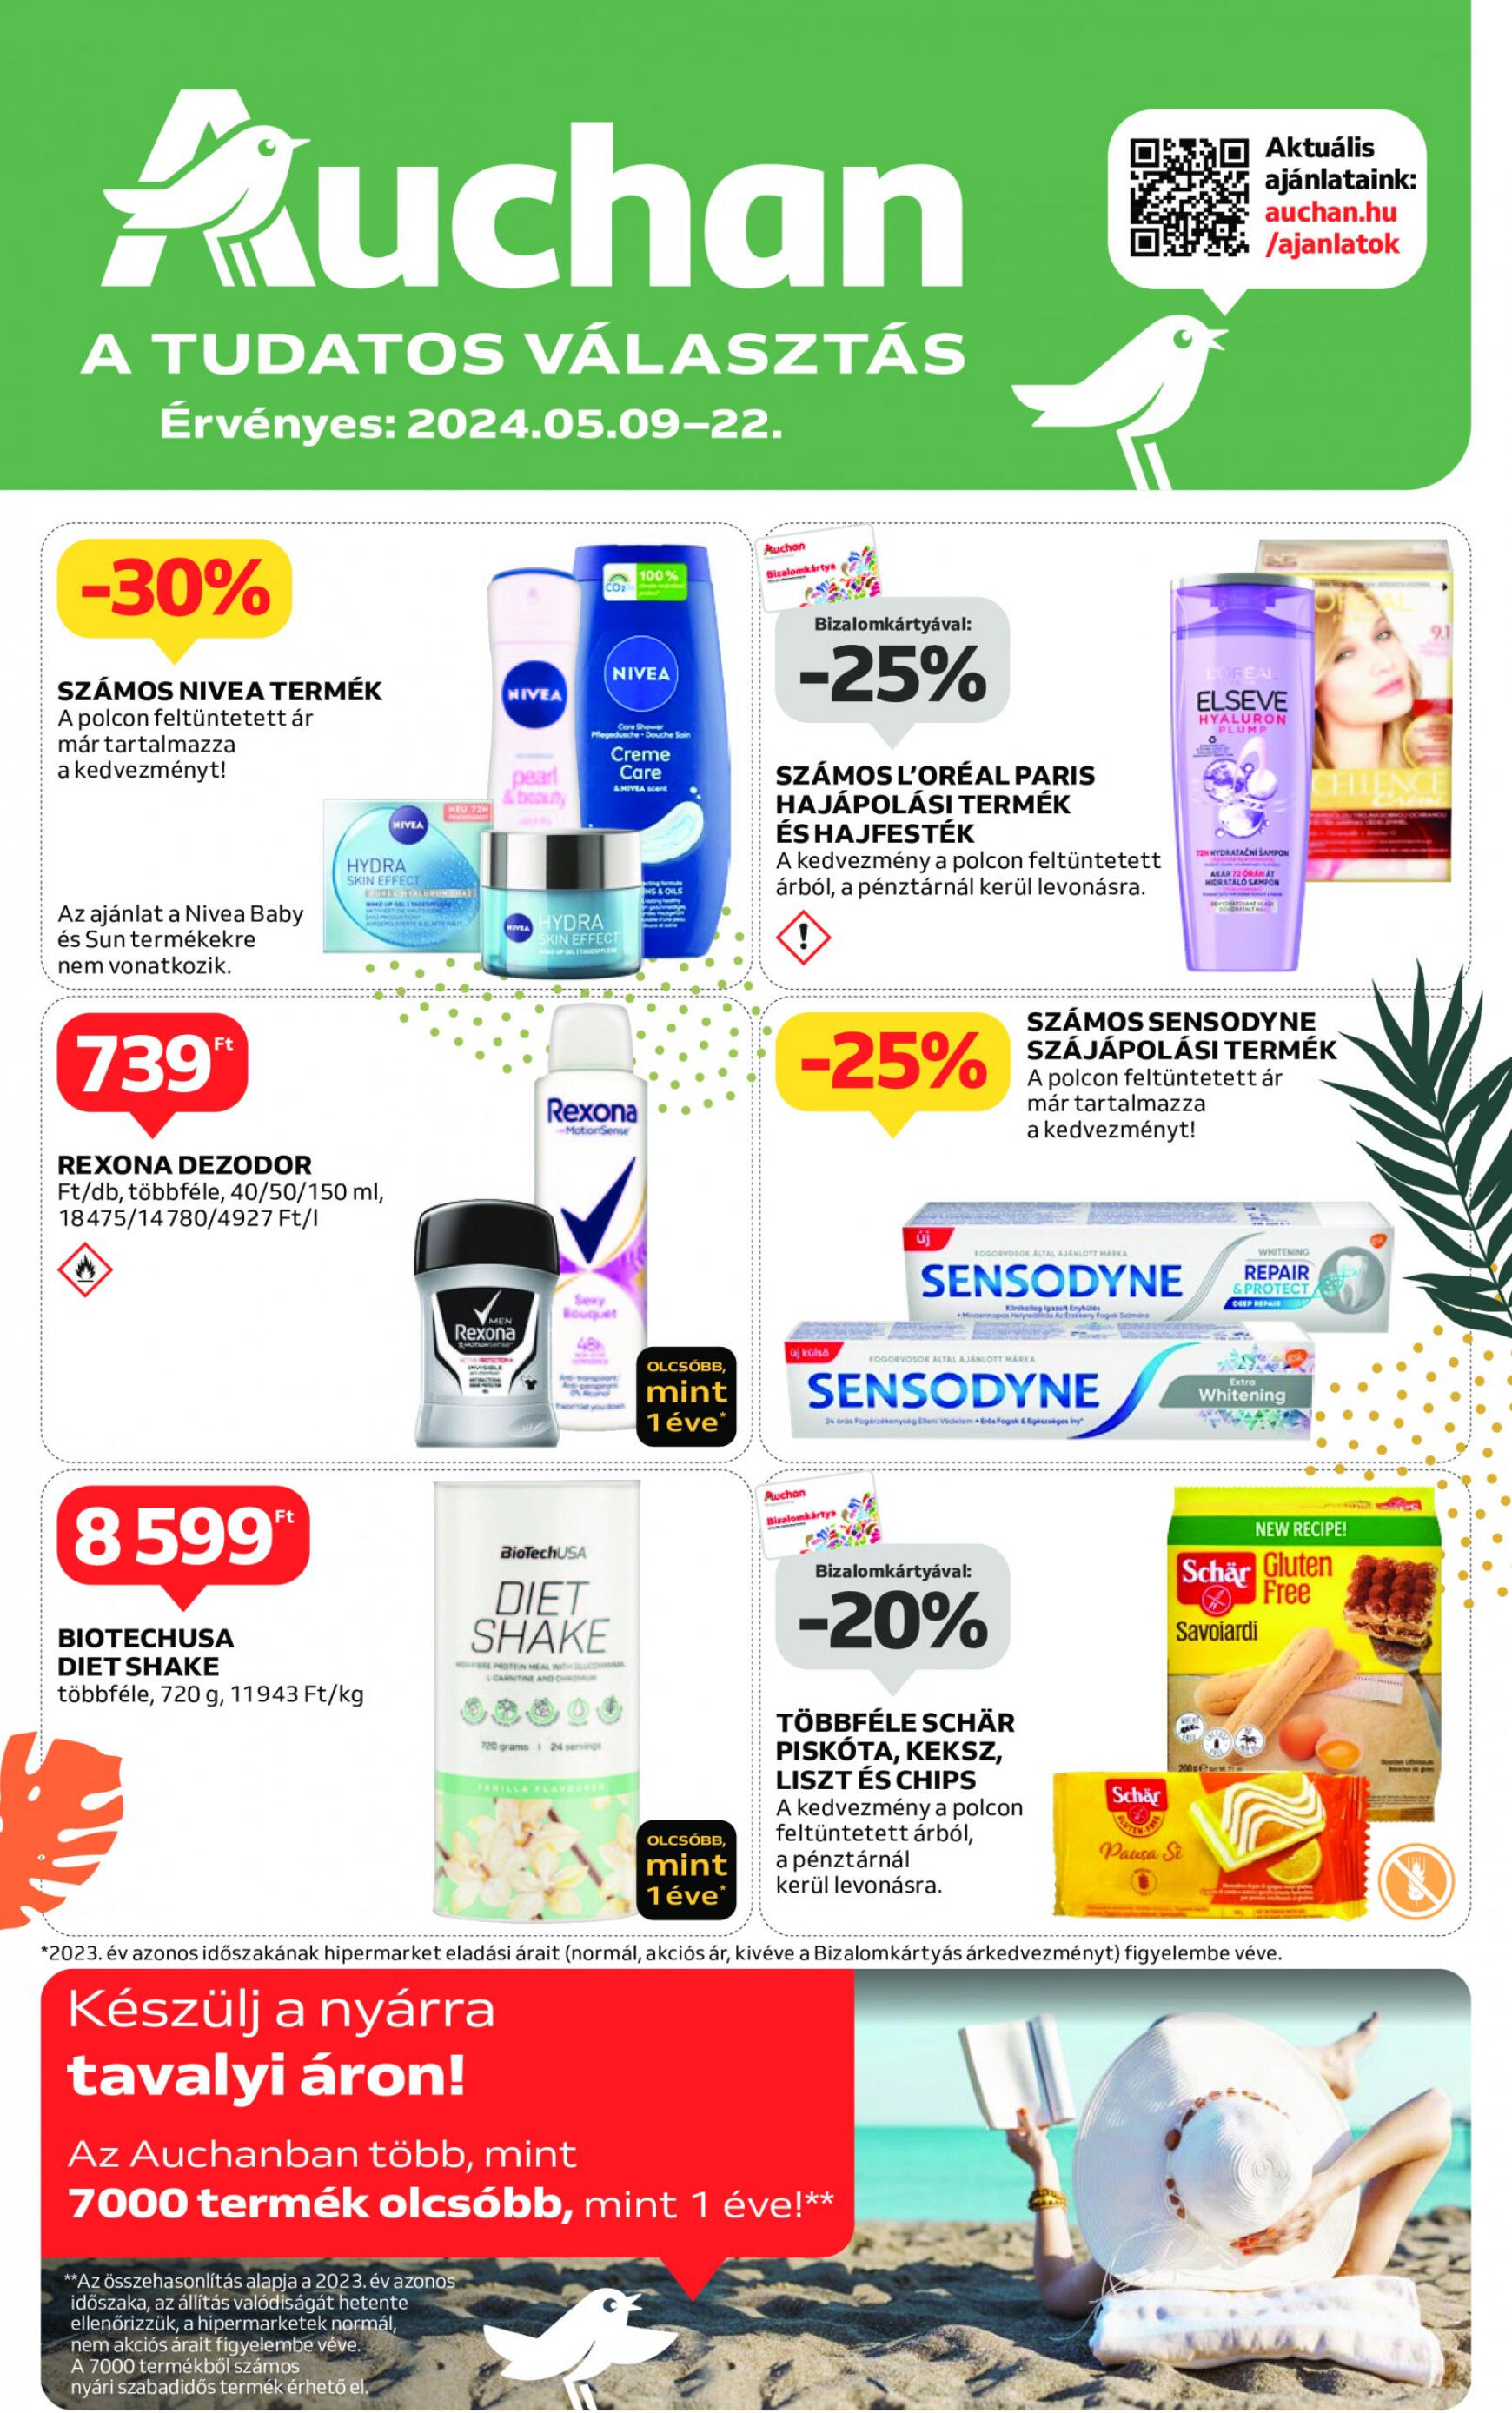 auchan - Aktuális újság Auchan 05.09. - 05.22. - page: 1